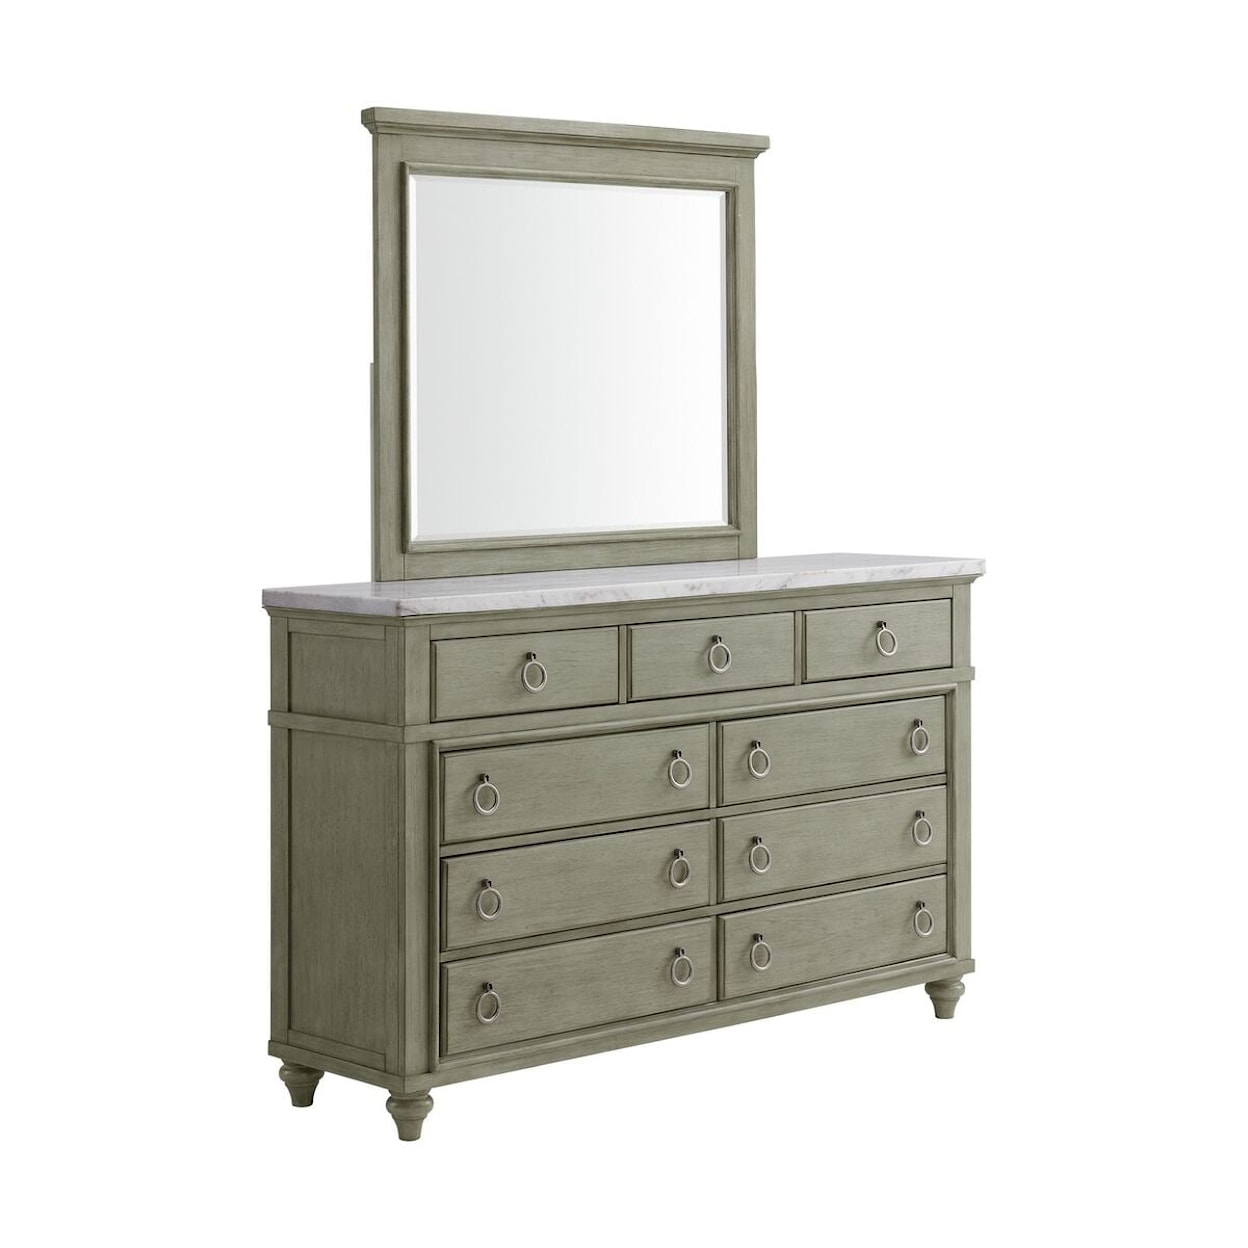 Elements International Kendari Dresser Mirror in Grey